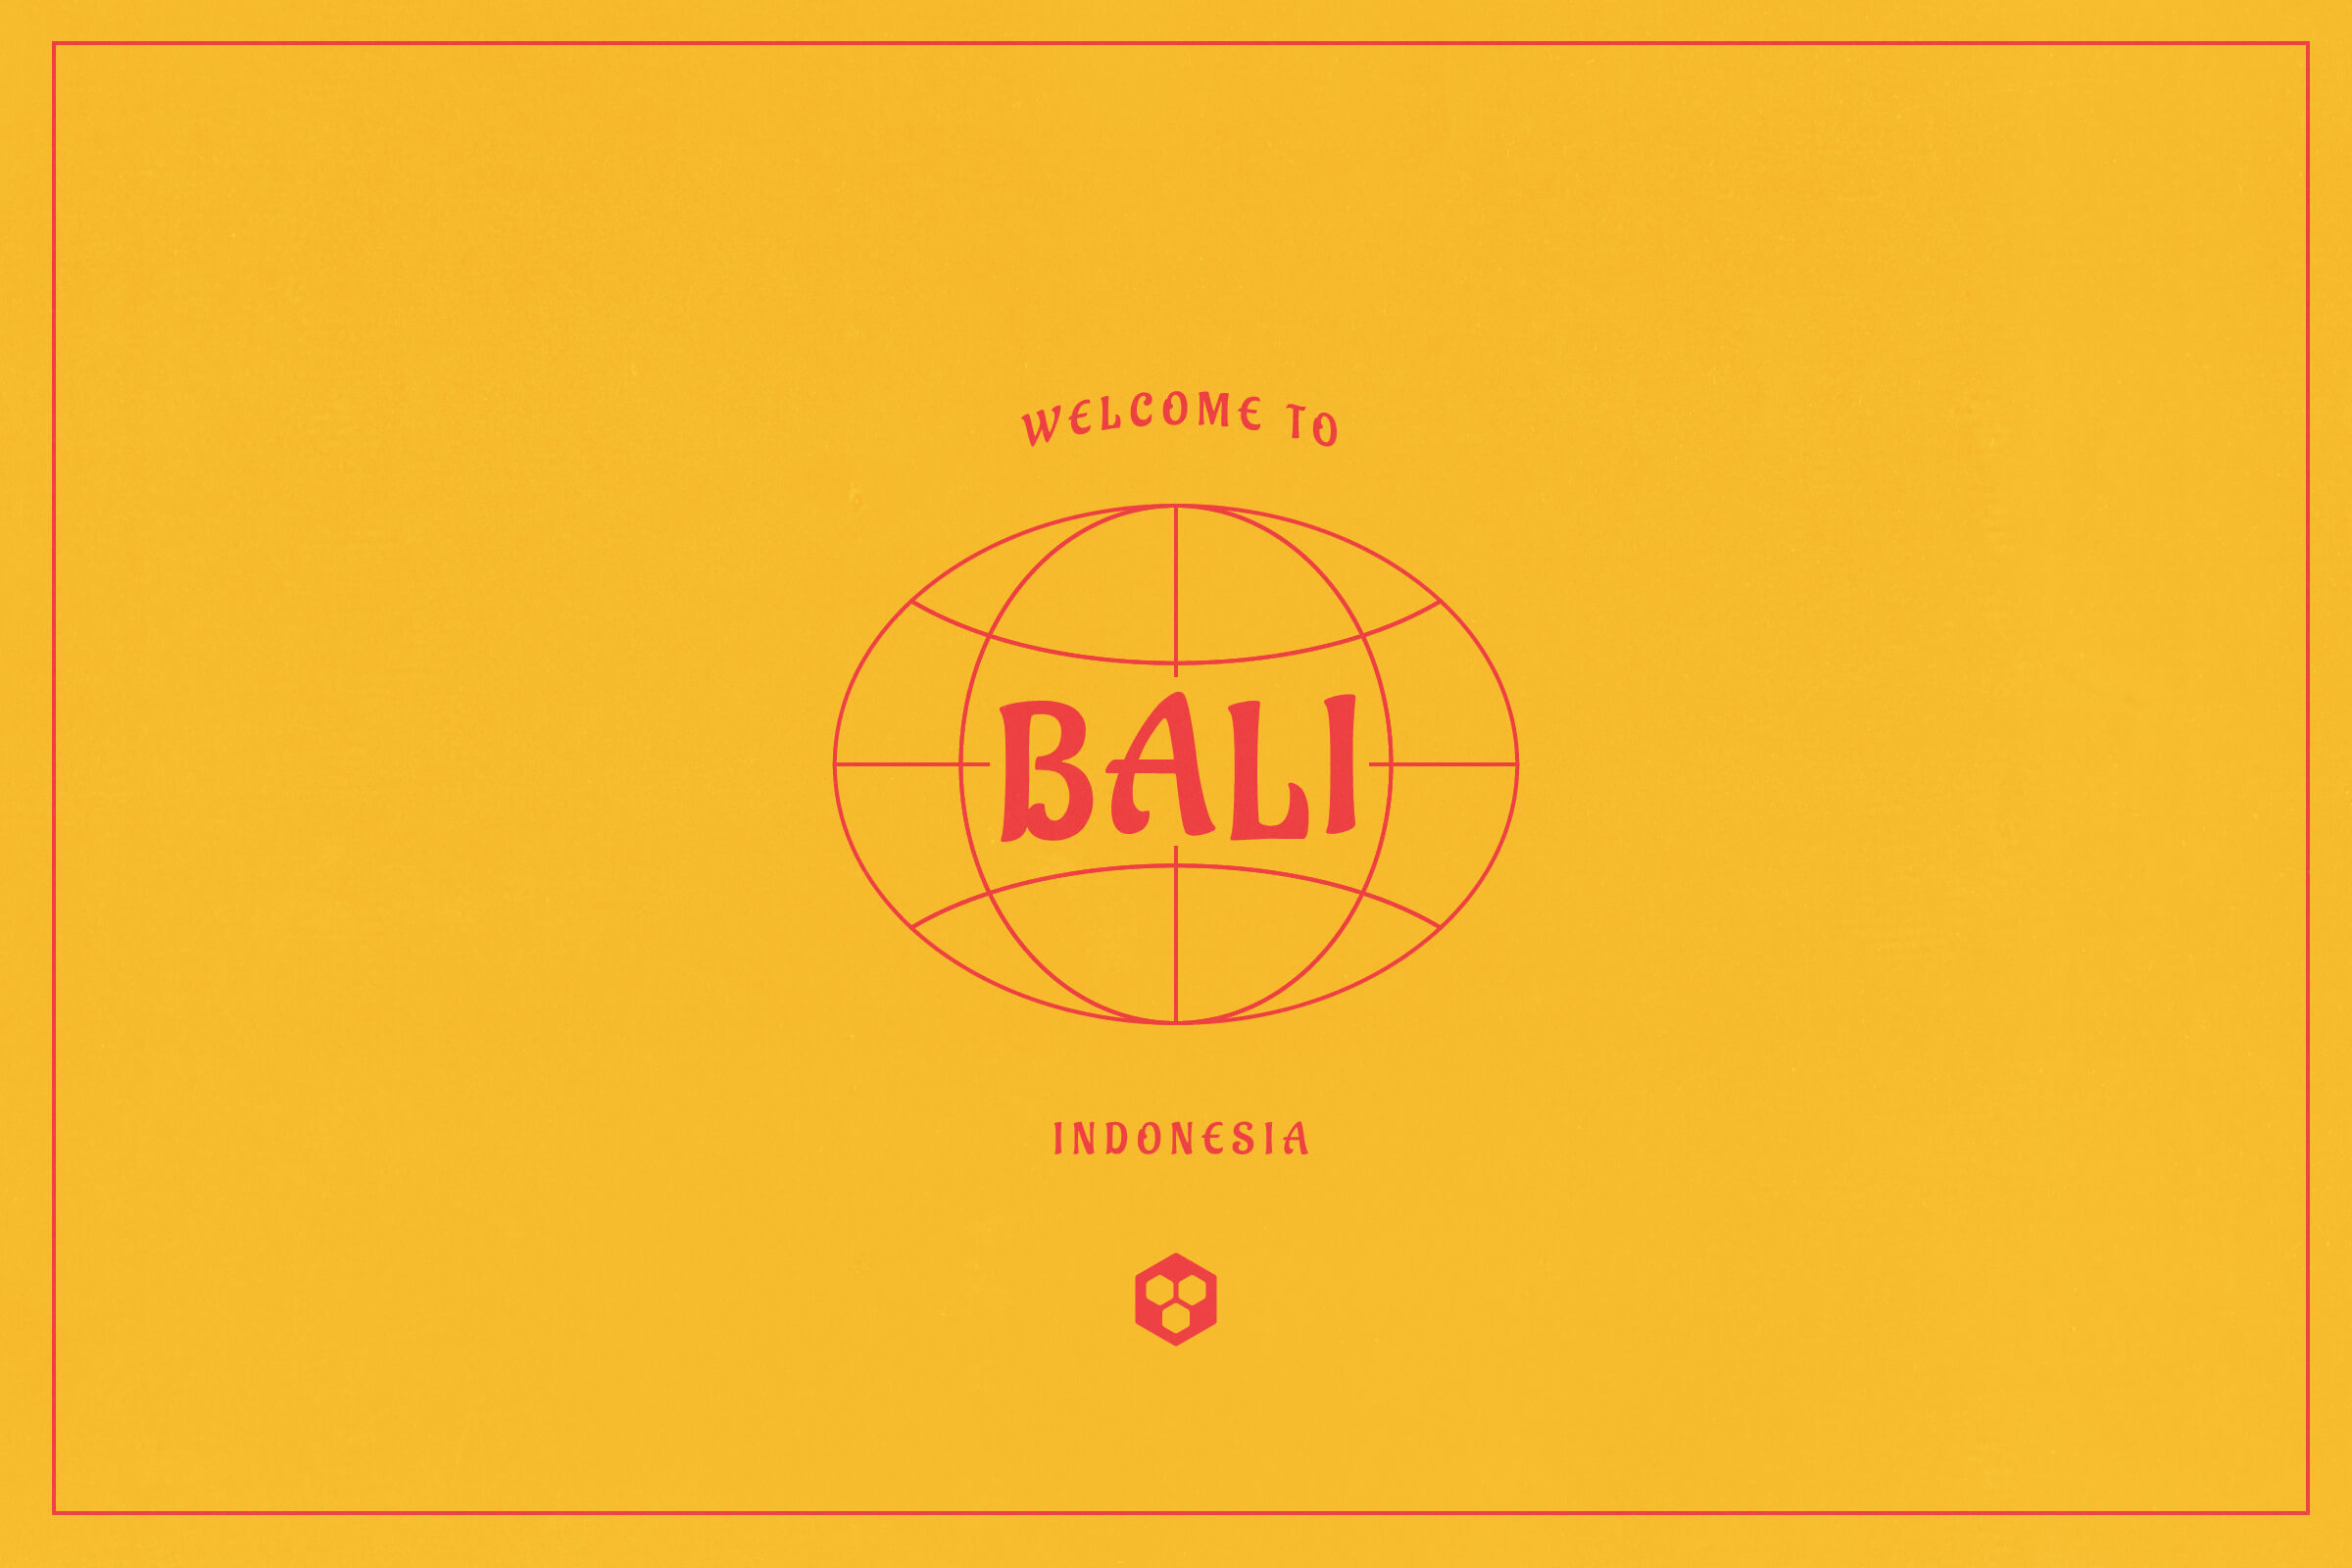 bali-welcome